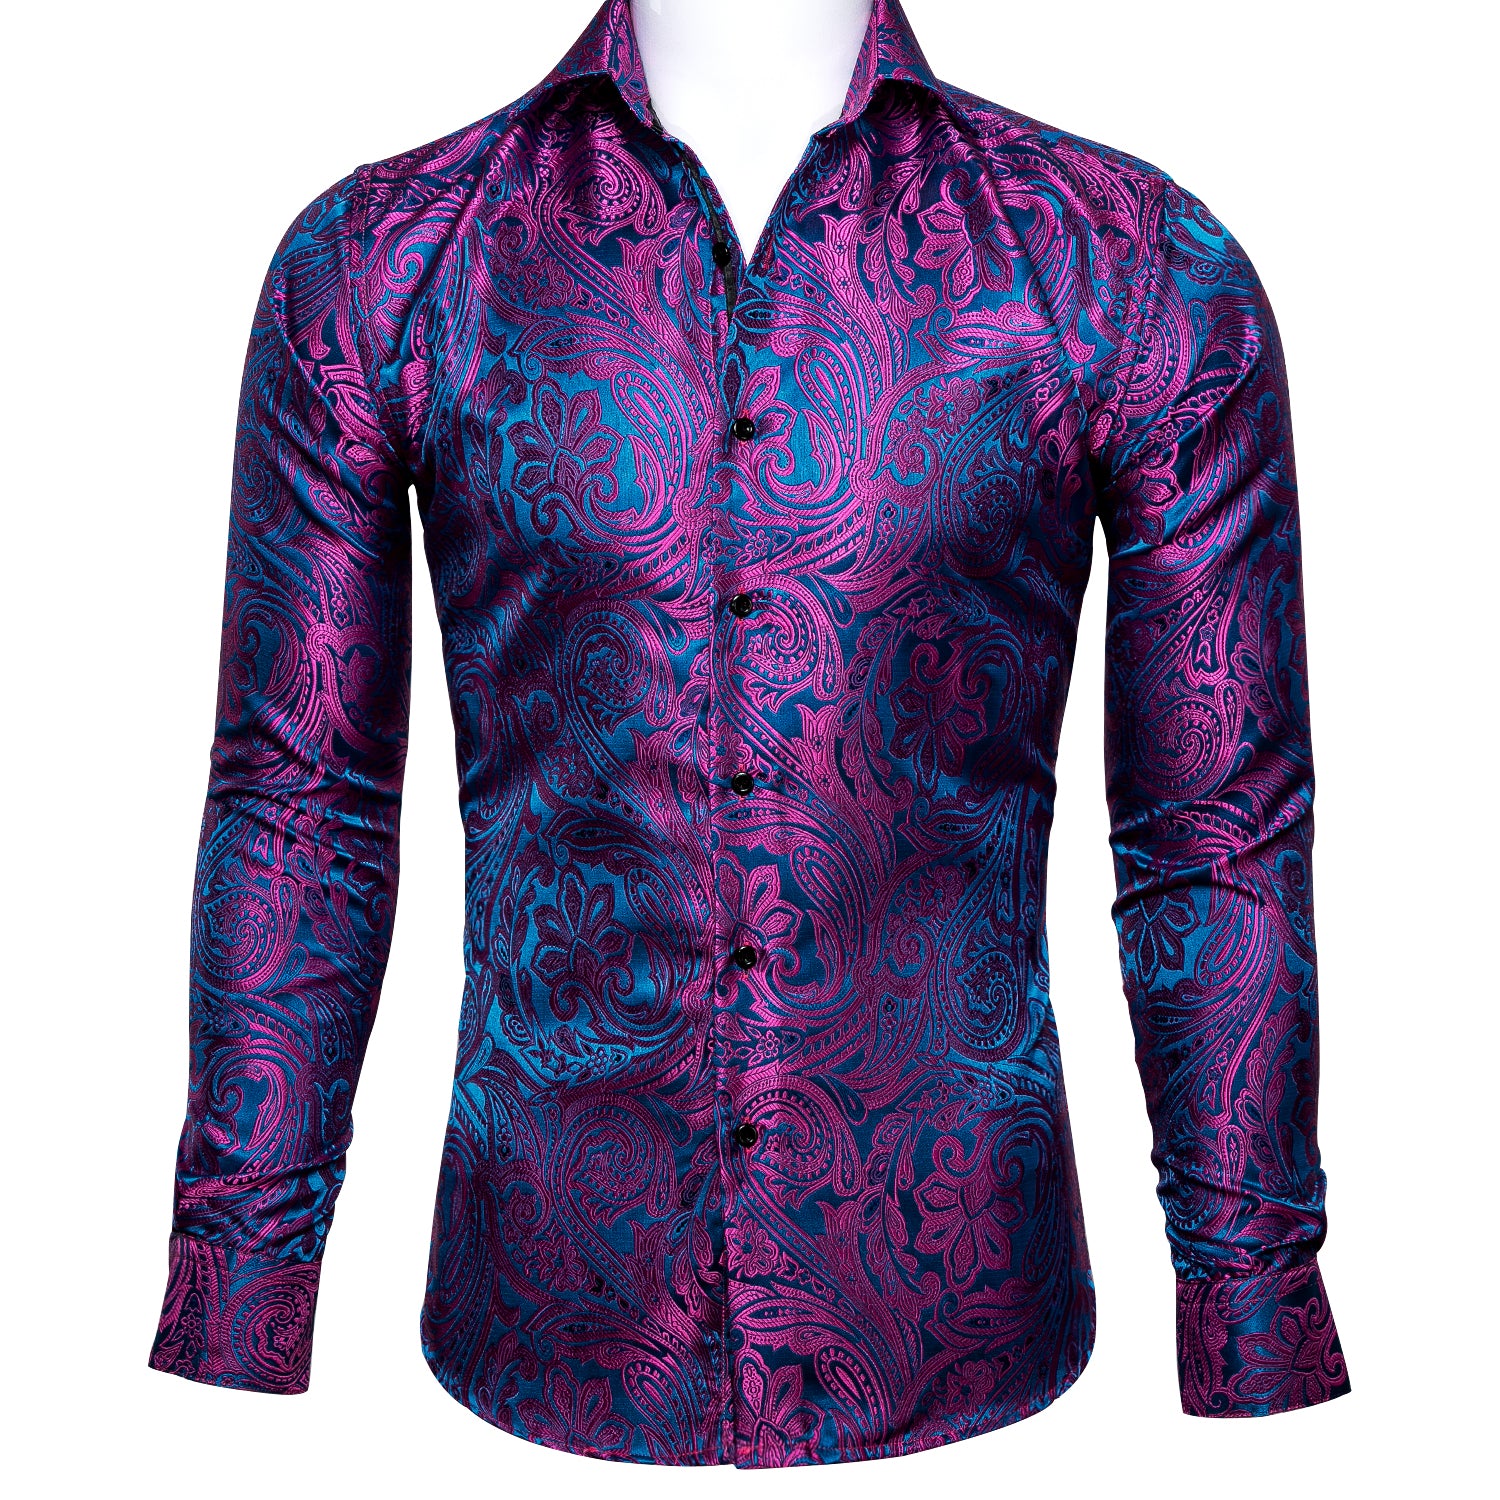 Barry.wang Blue Purple Floral Shirt